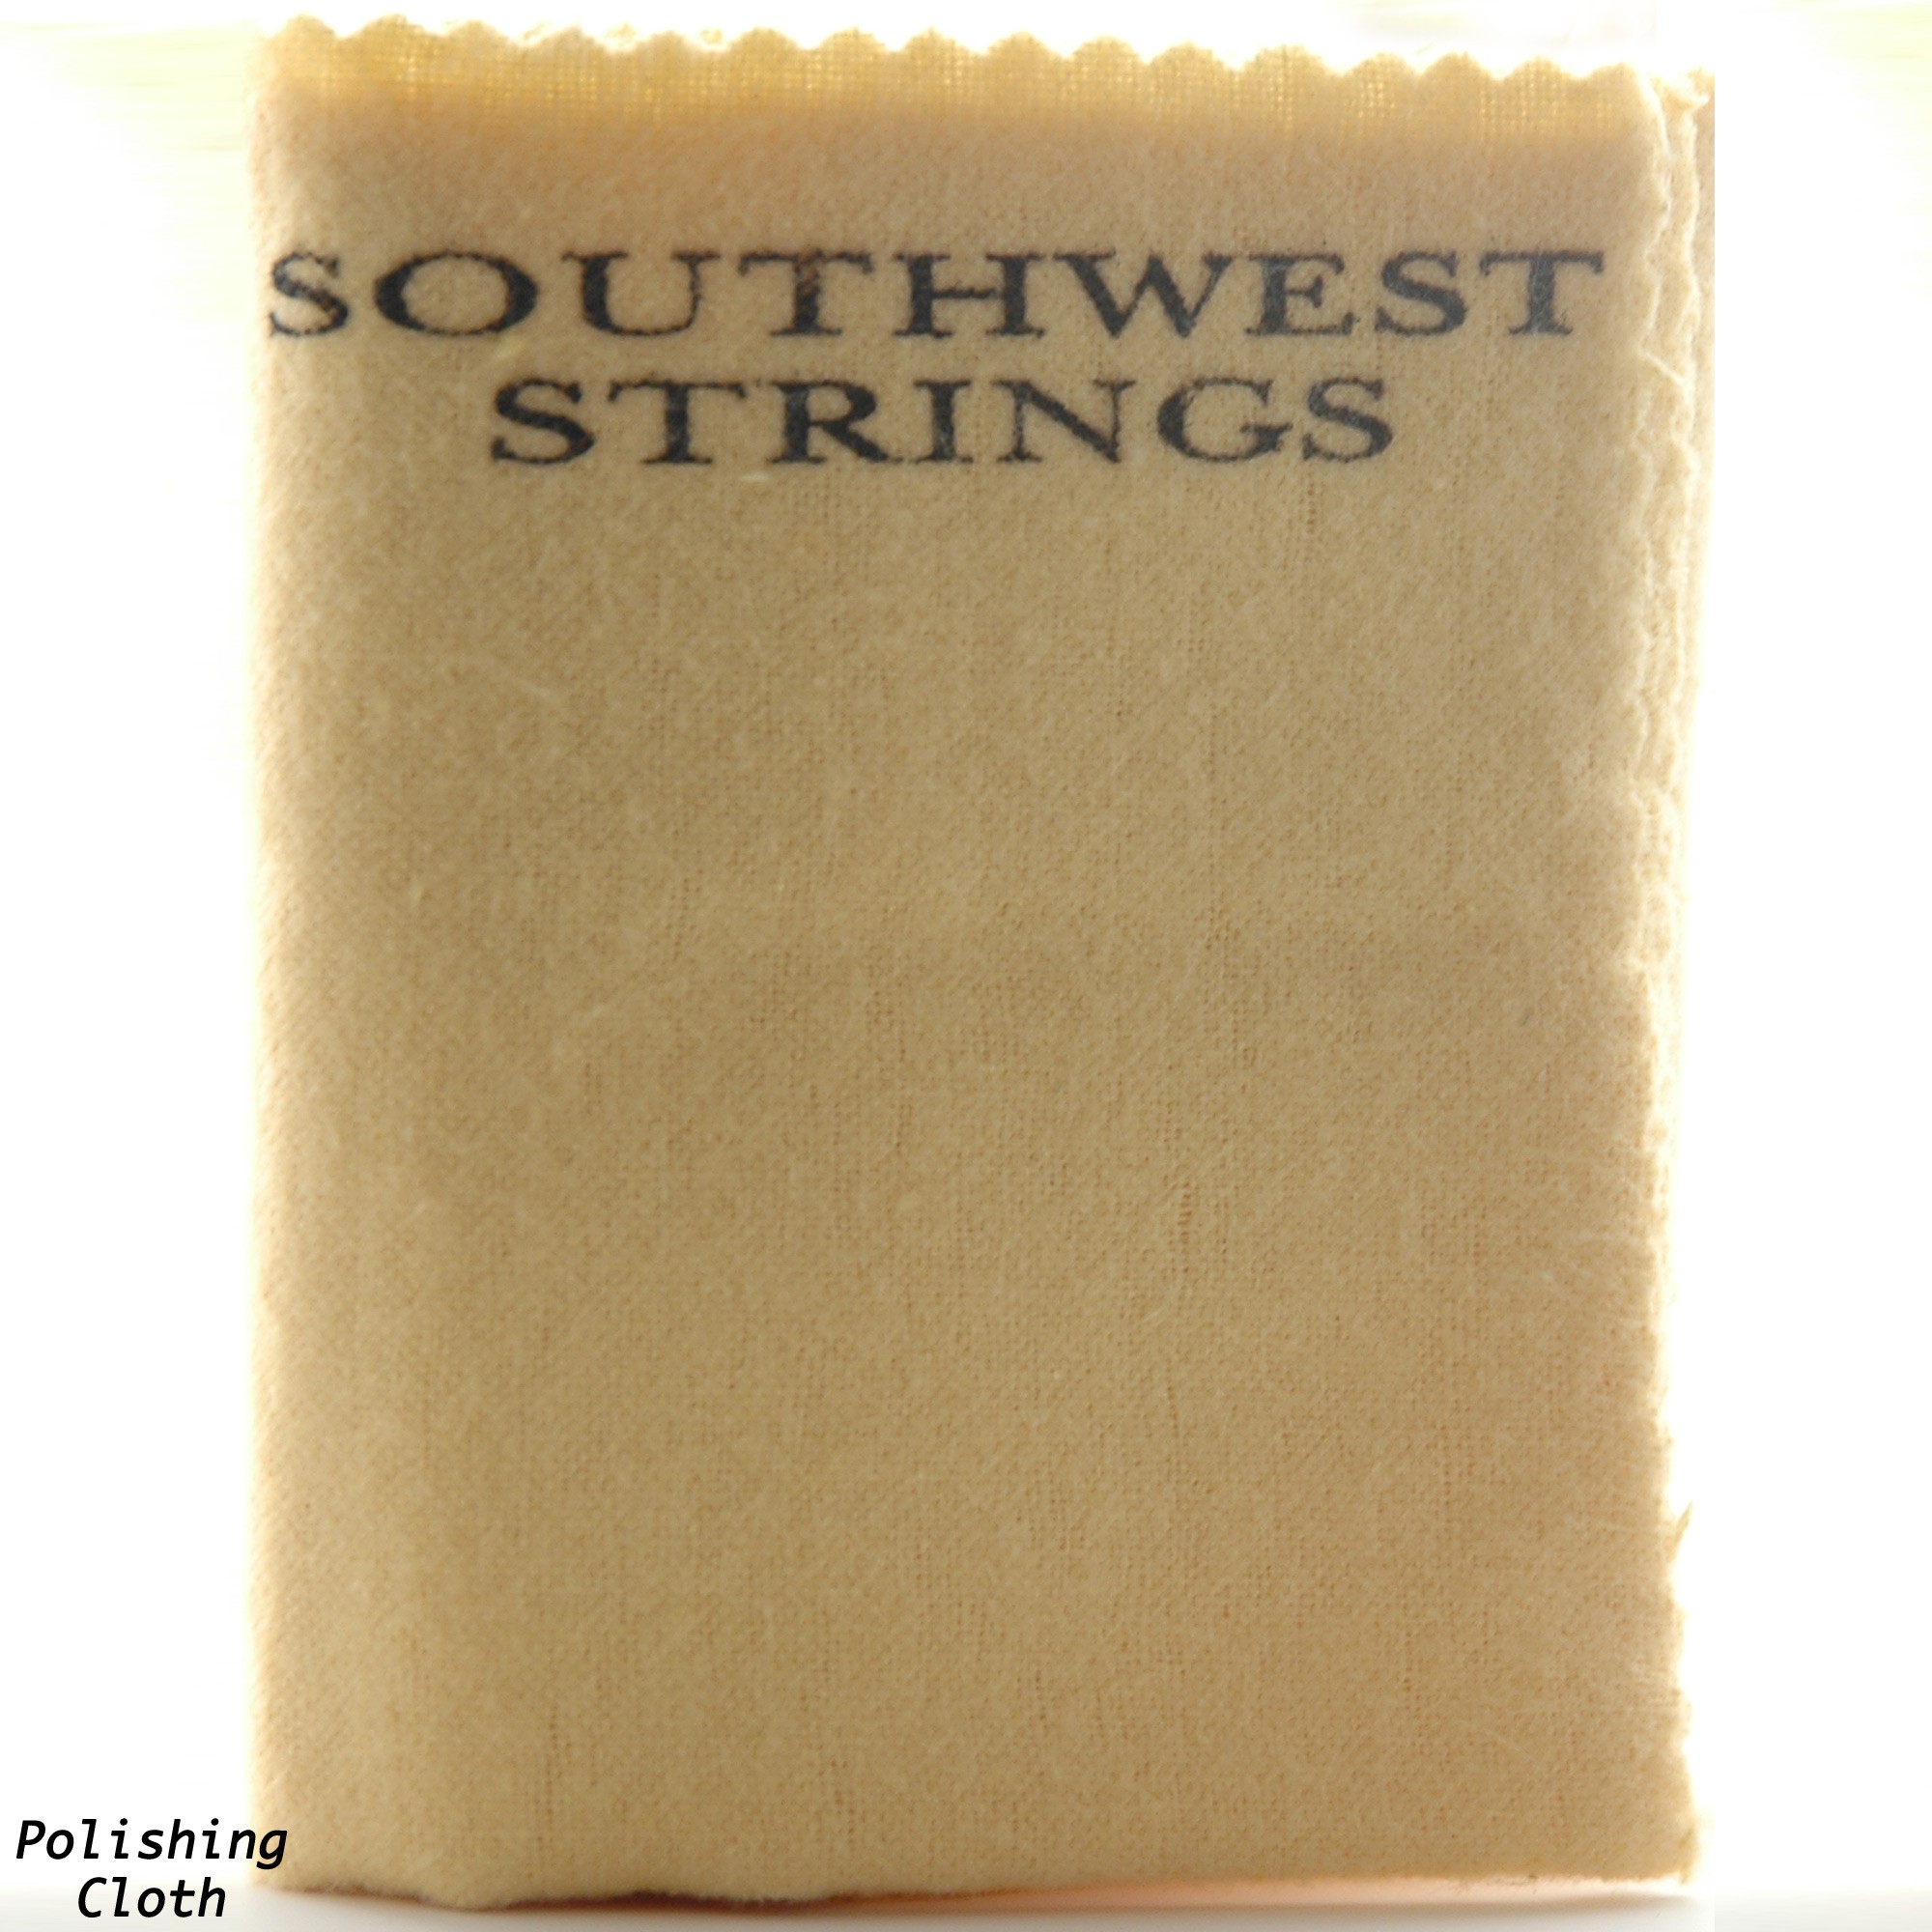 Polish & Cloths, Southwest Strings